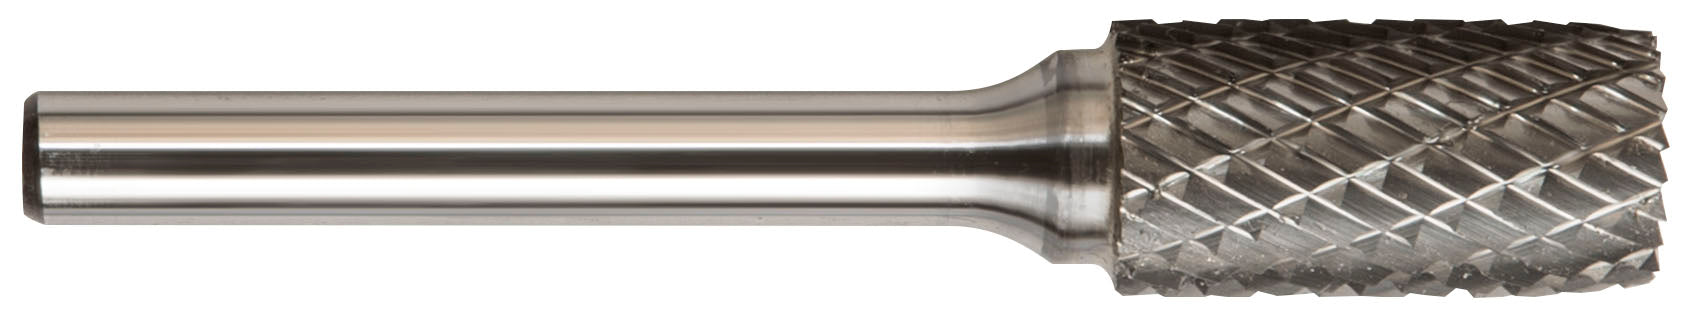 1/2" x 1" x 1/4" Drillco Double Cut Carbide Bur SB-5 (Cylindrical with End Cut)